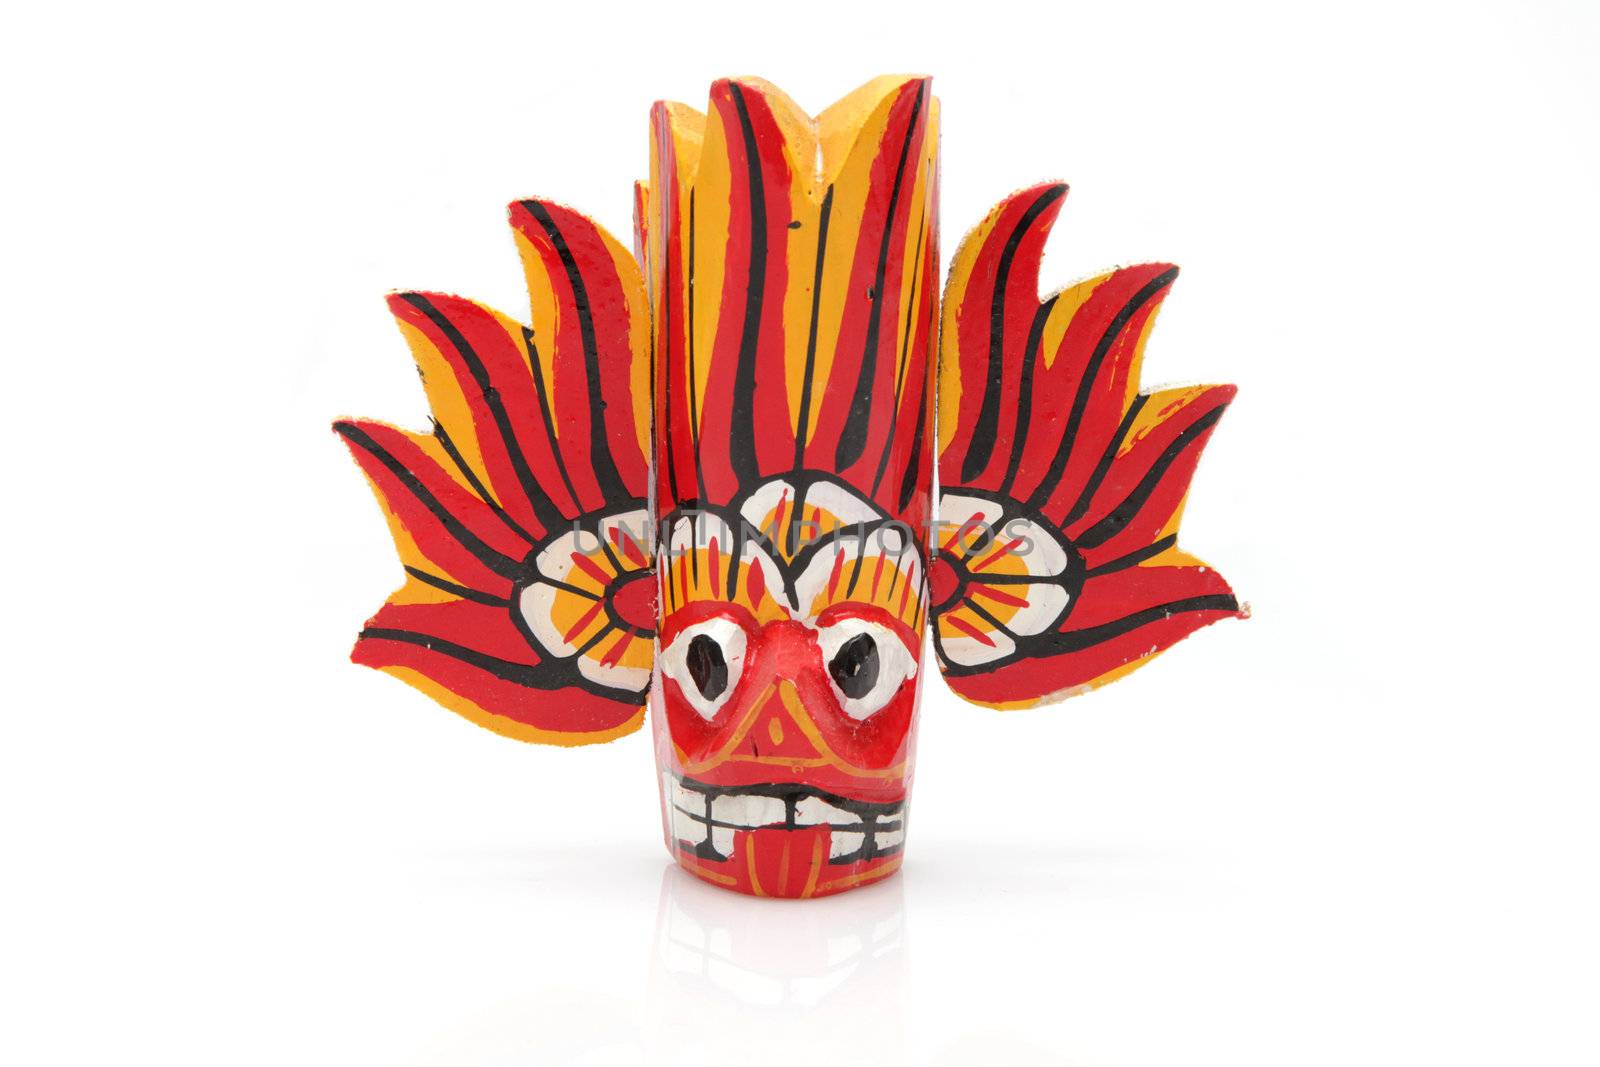 Fire Mask - Wooden Mask from Sri Lanka by haiderazim